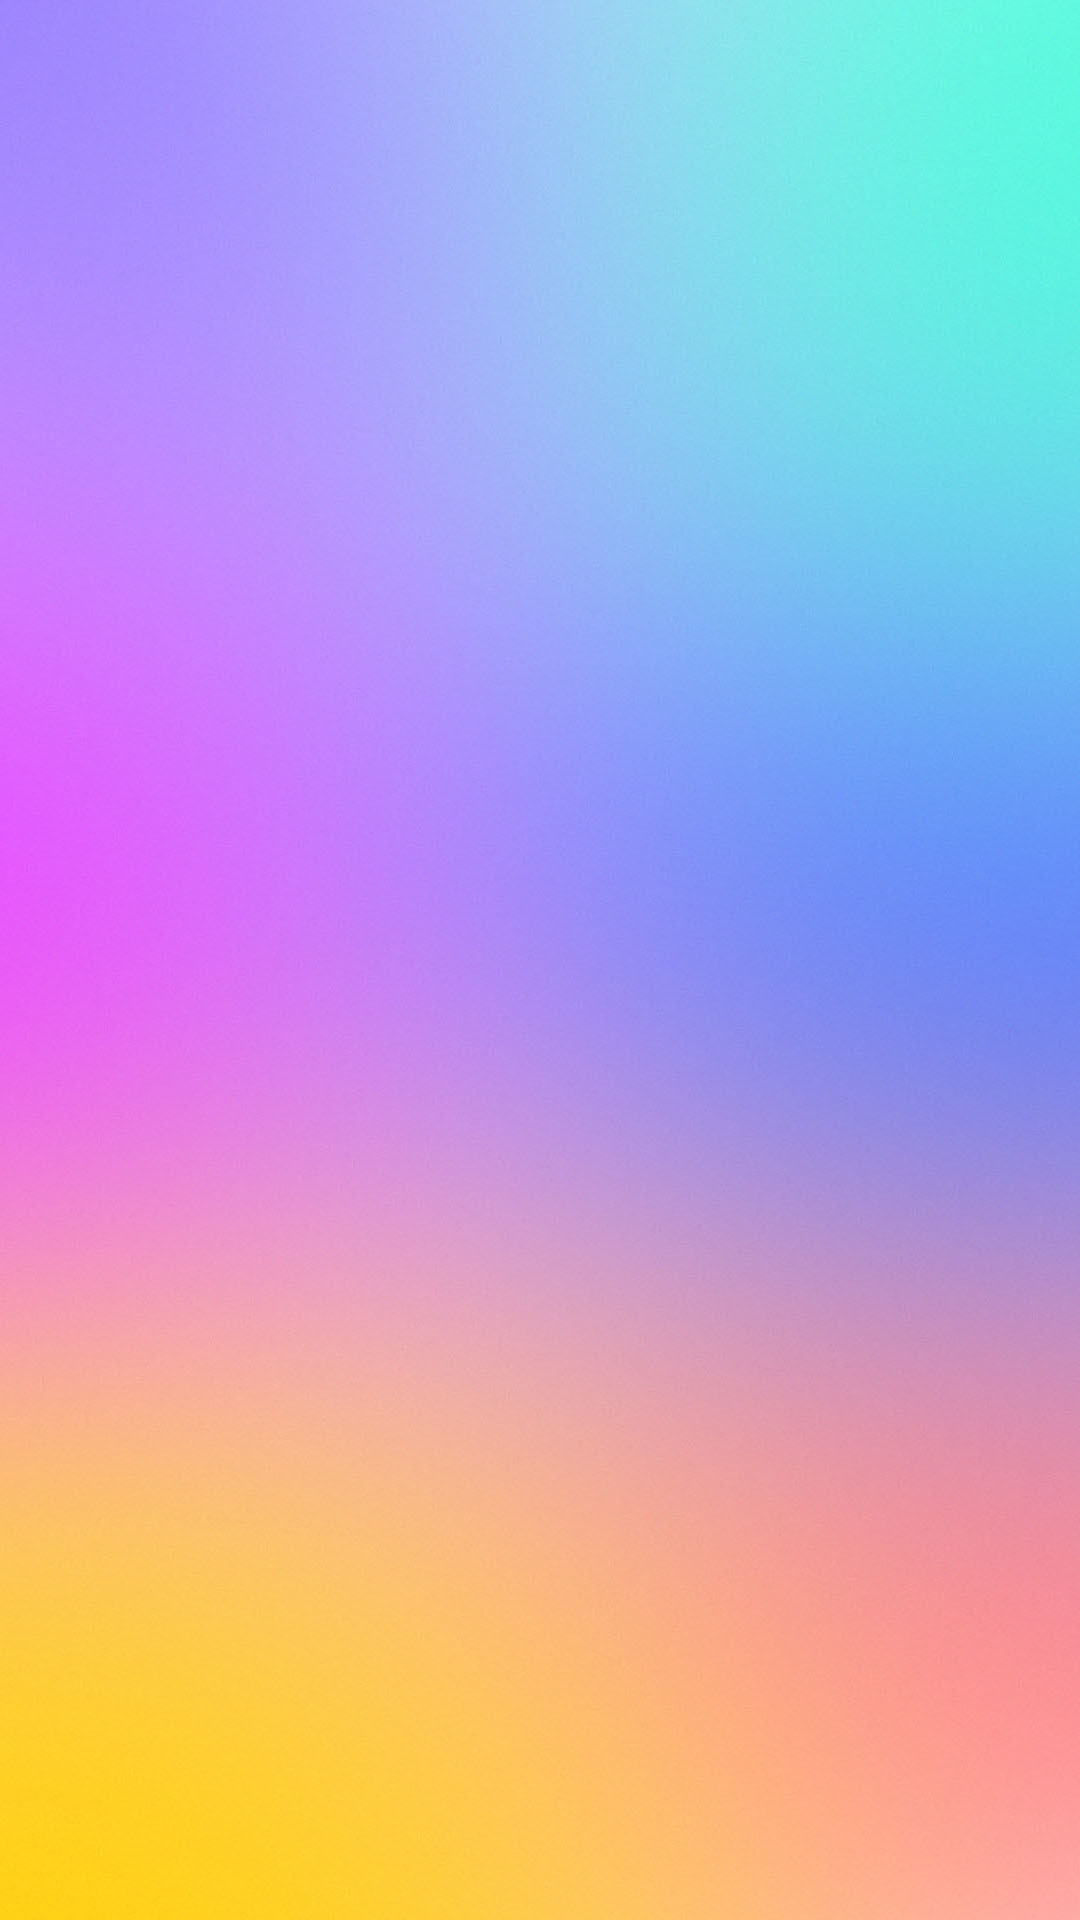 Rainbow iPhone wallpaper cute mobile  Premium Vector  rawpixel